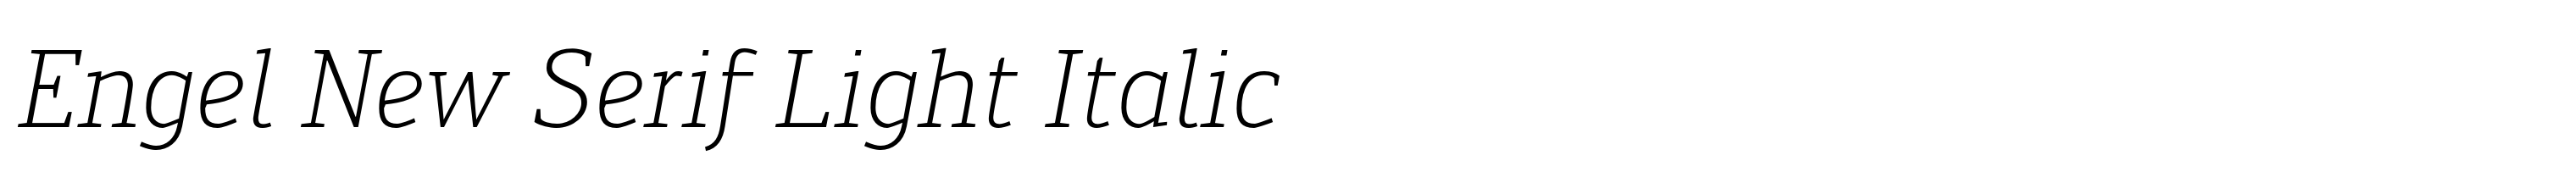 Engel New Serif Light Italic